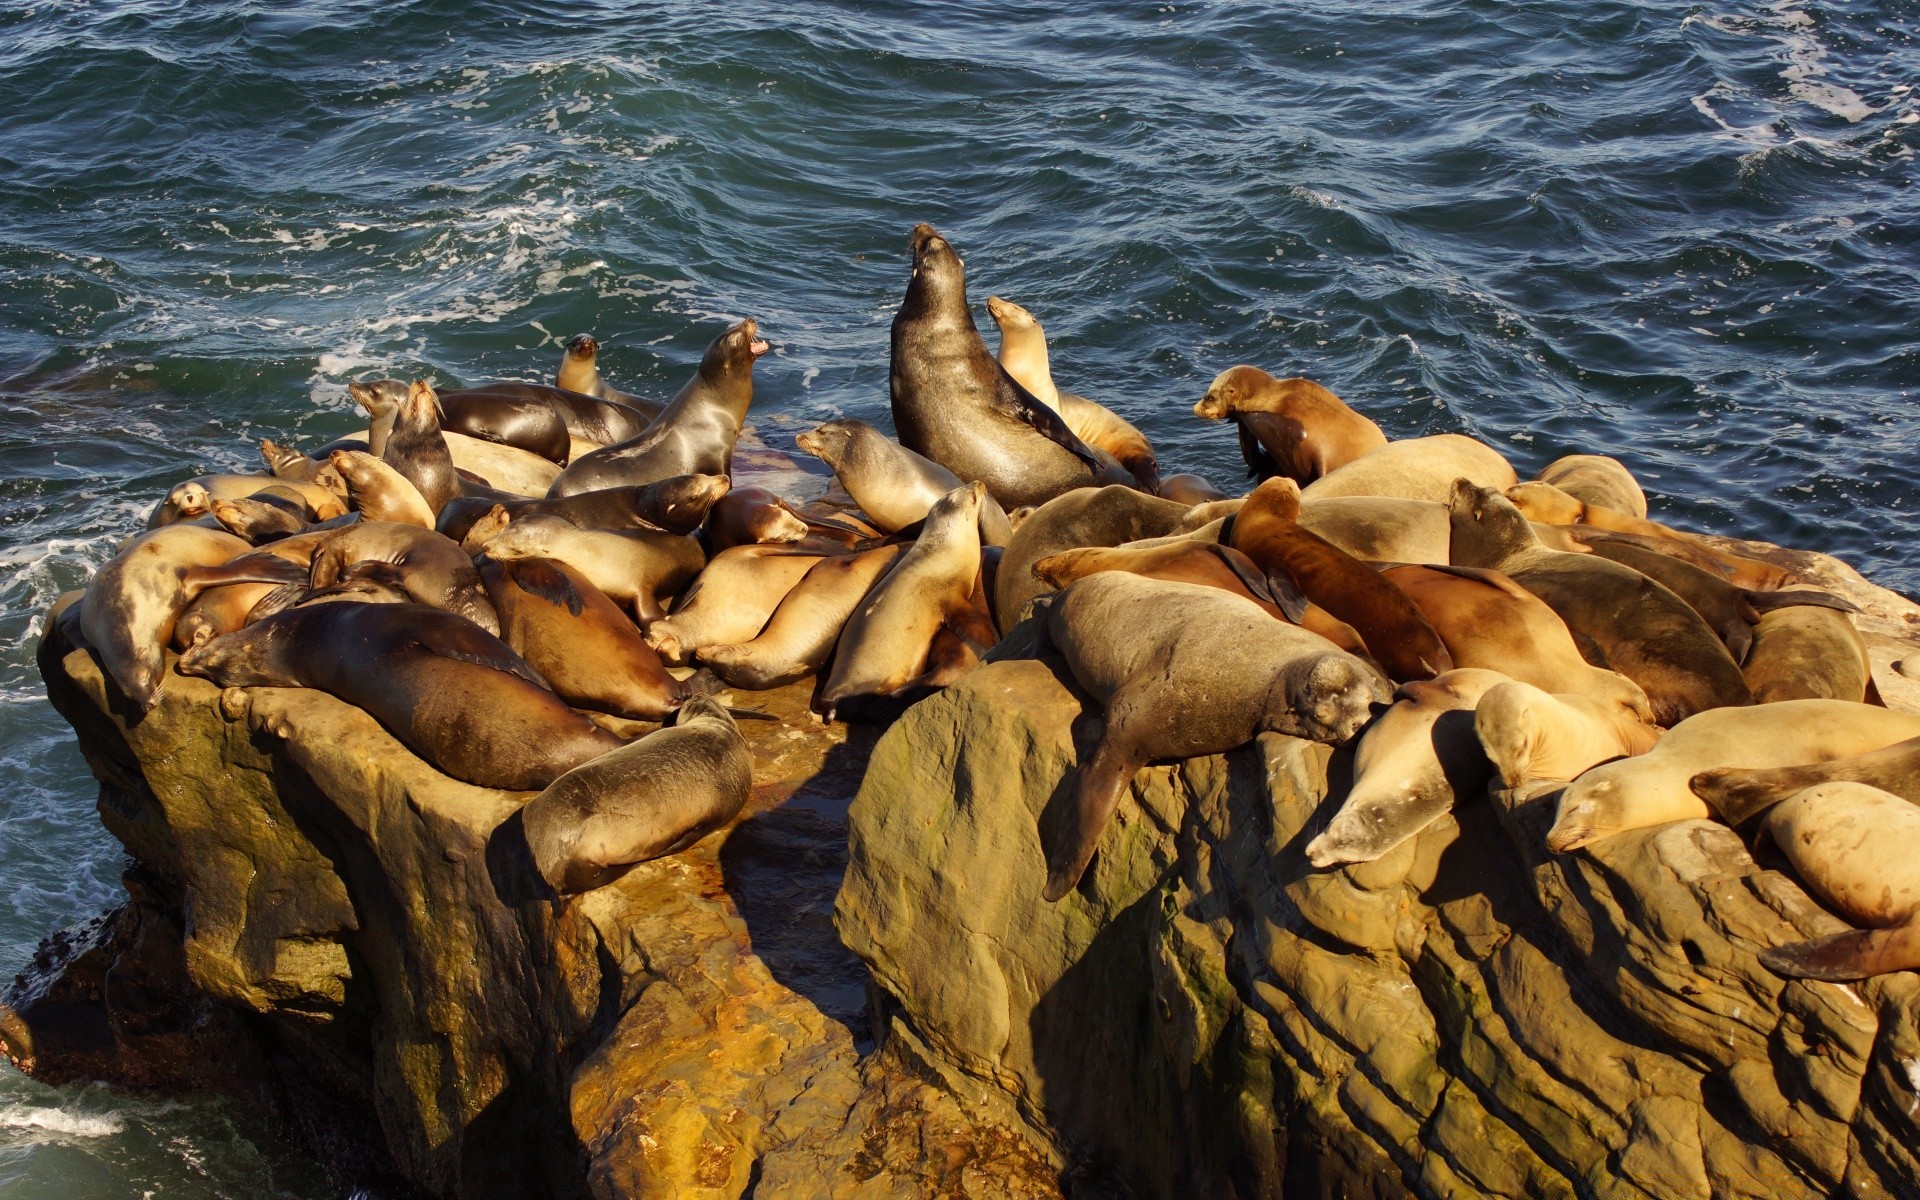 america water sea ocean seashore seal nature mammal marine wildlife beach rock outdoors animal wet